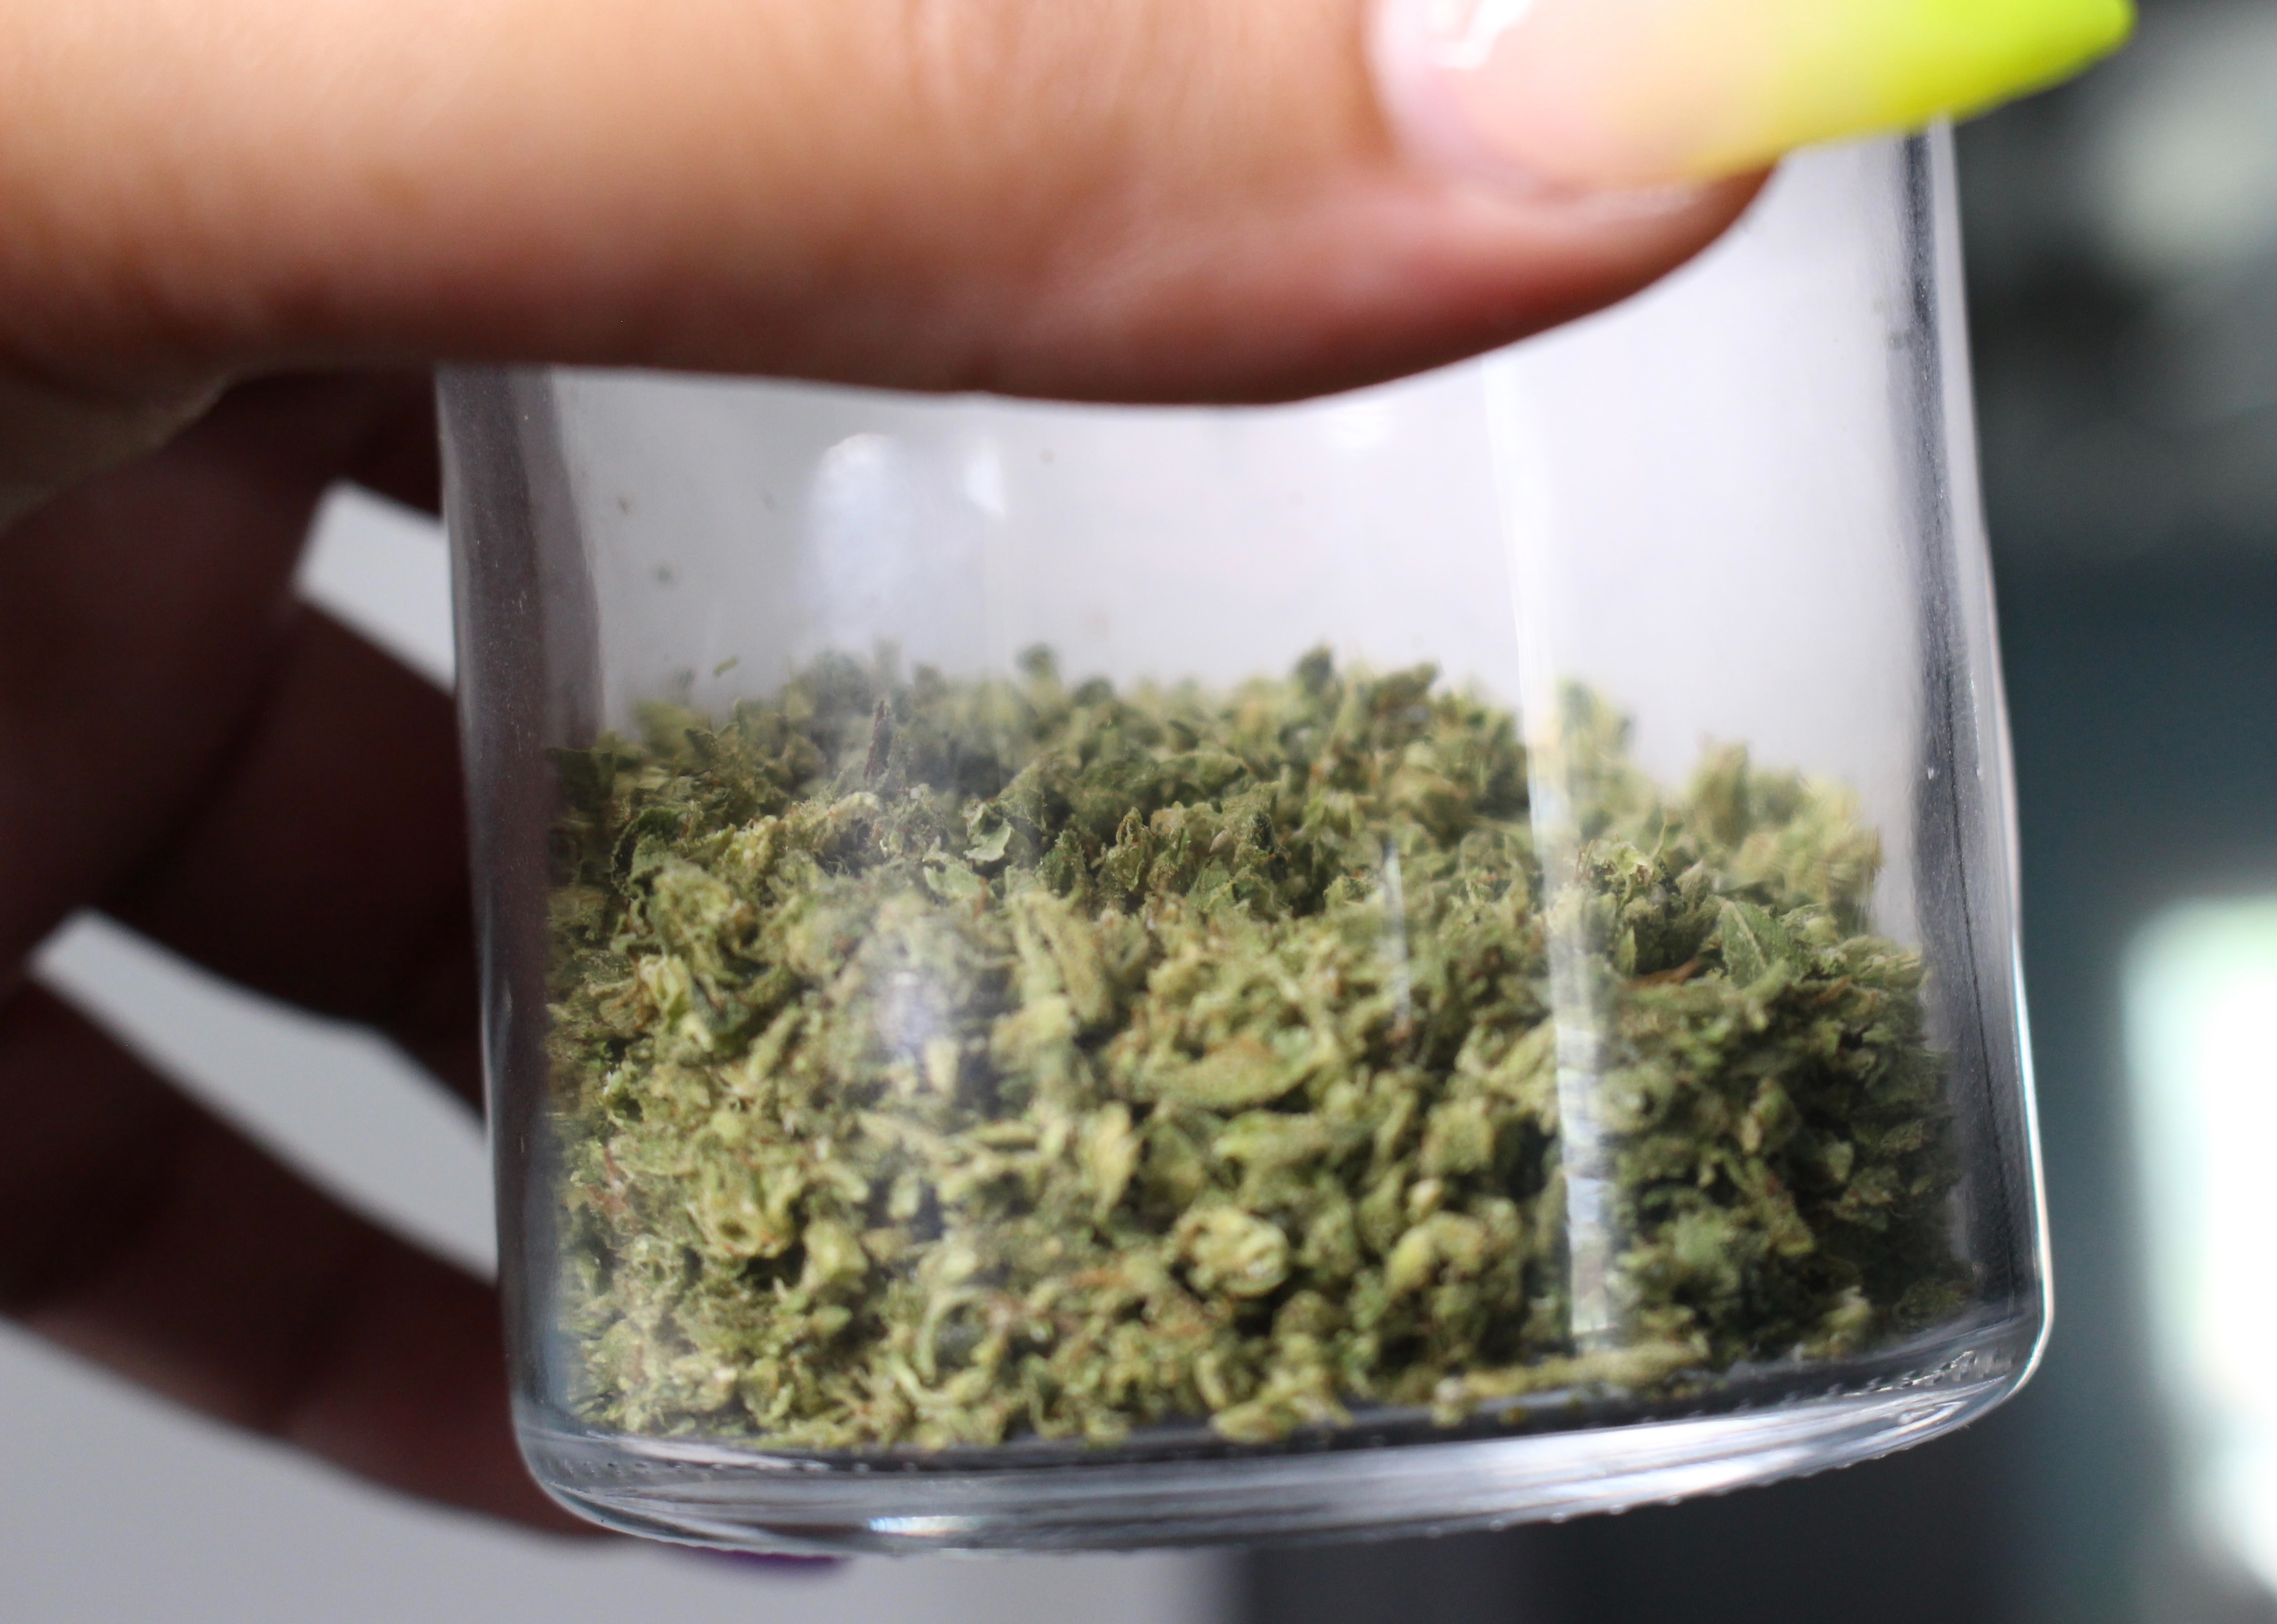 Jar of marijuana